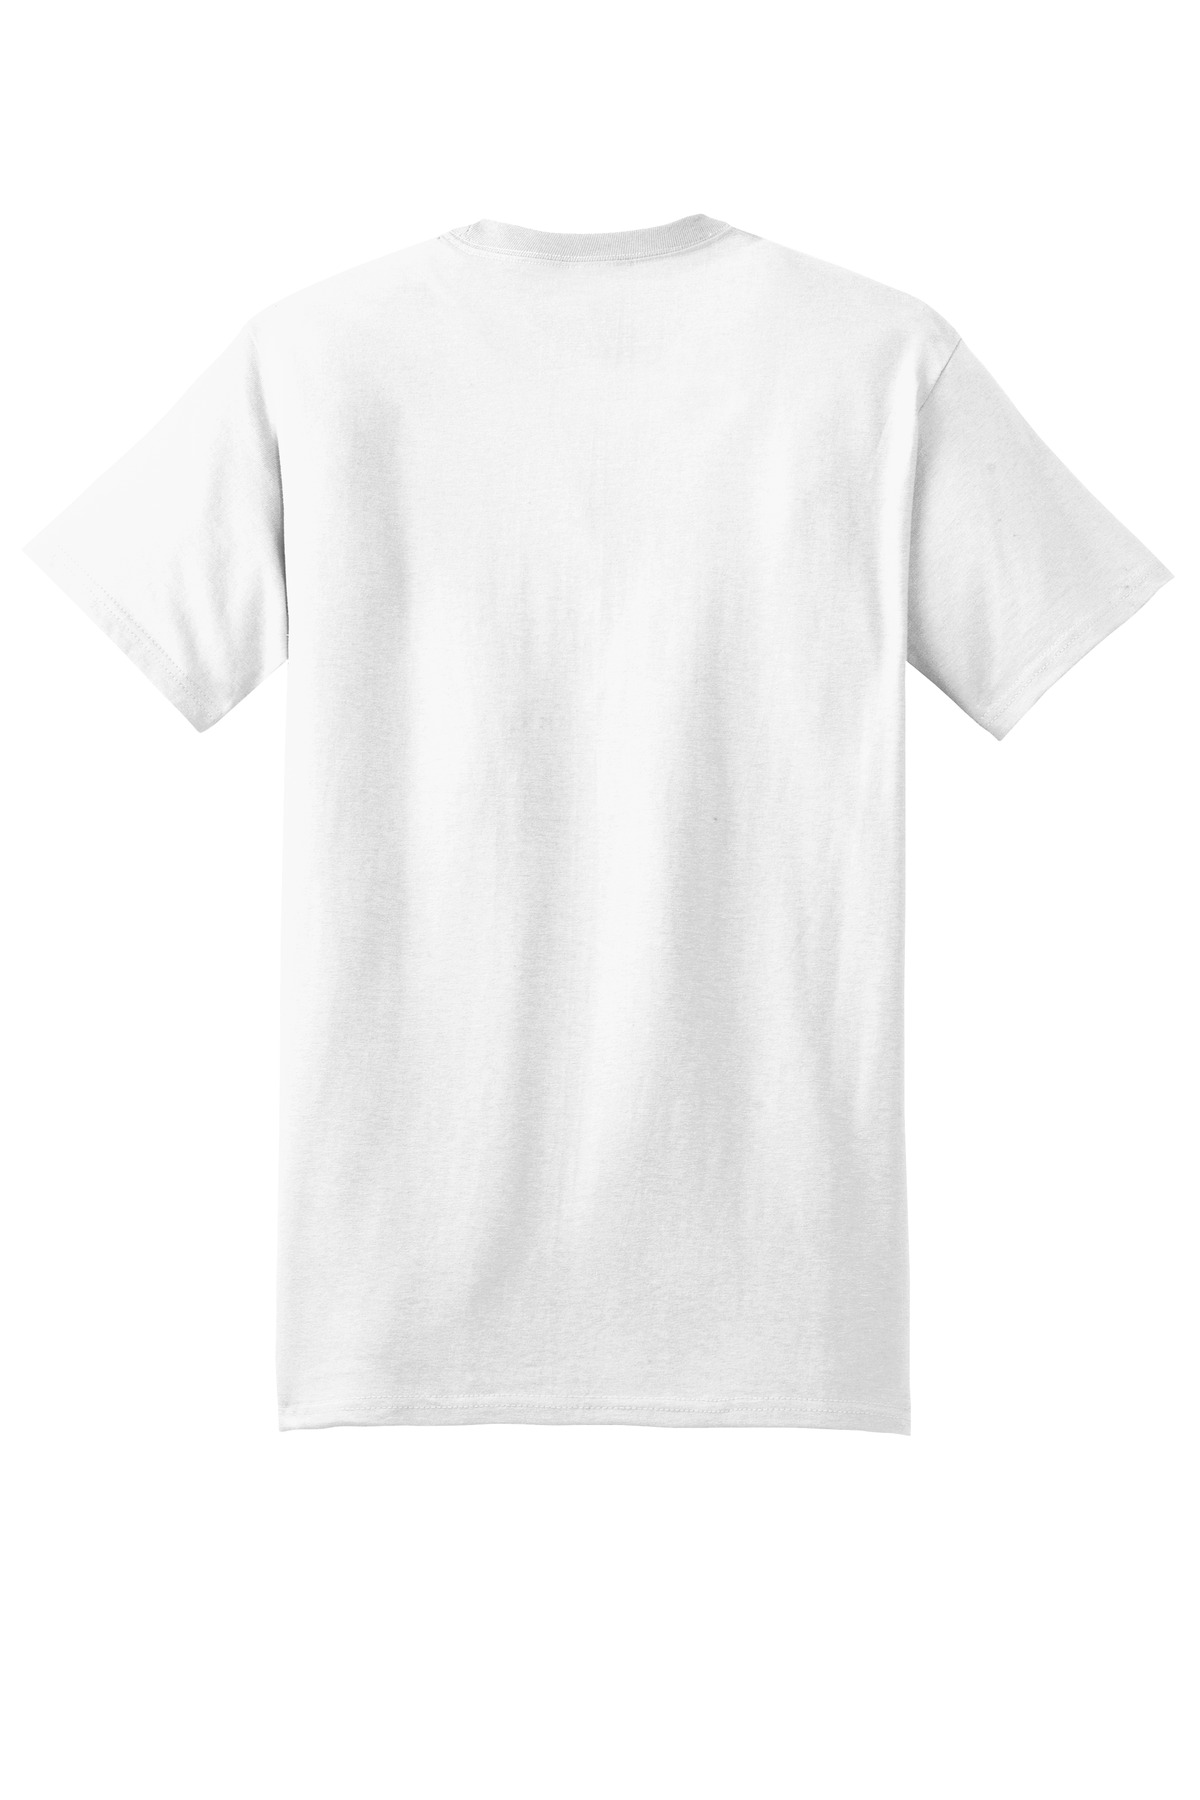 Hanes Beefy-T – 100% Cotton T-Shirt. 5180 – Dynasty Custom